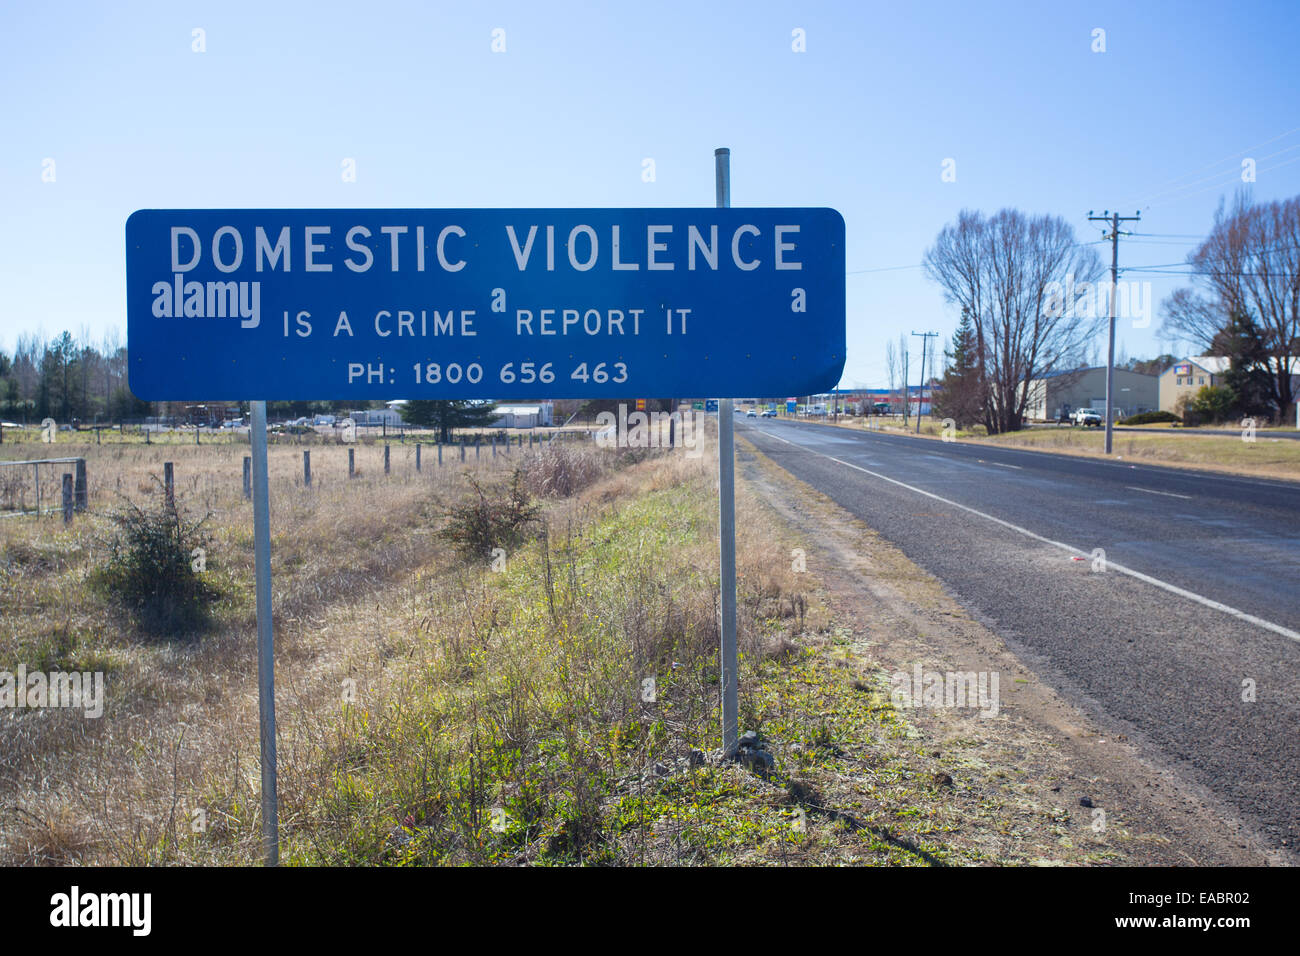 Road sign to report domestic violence, Australia Stock Photo